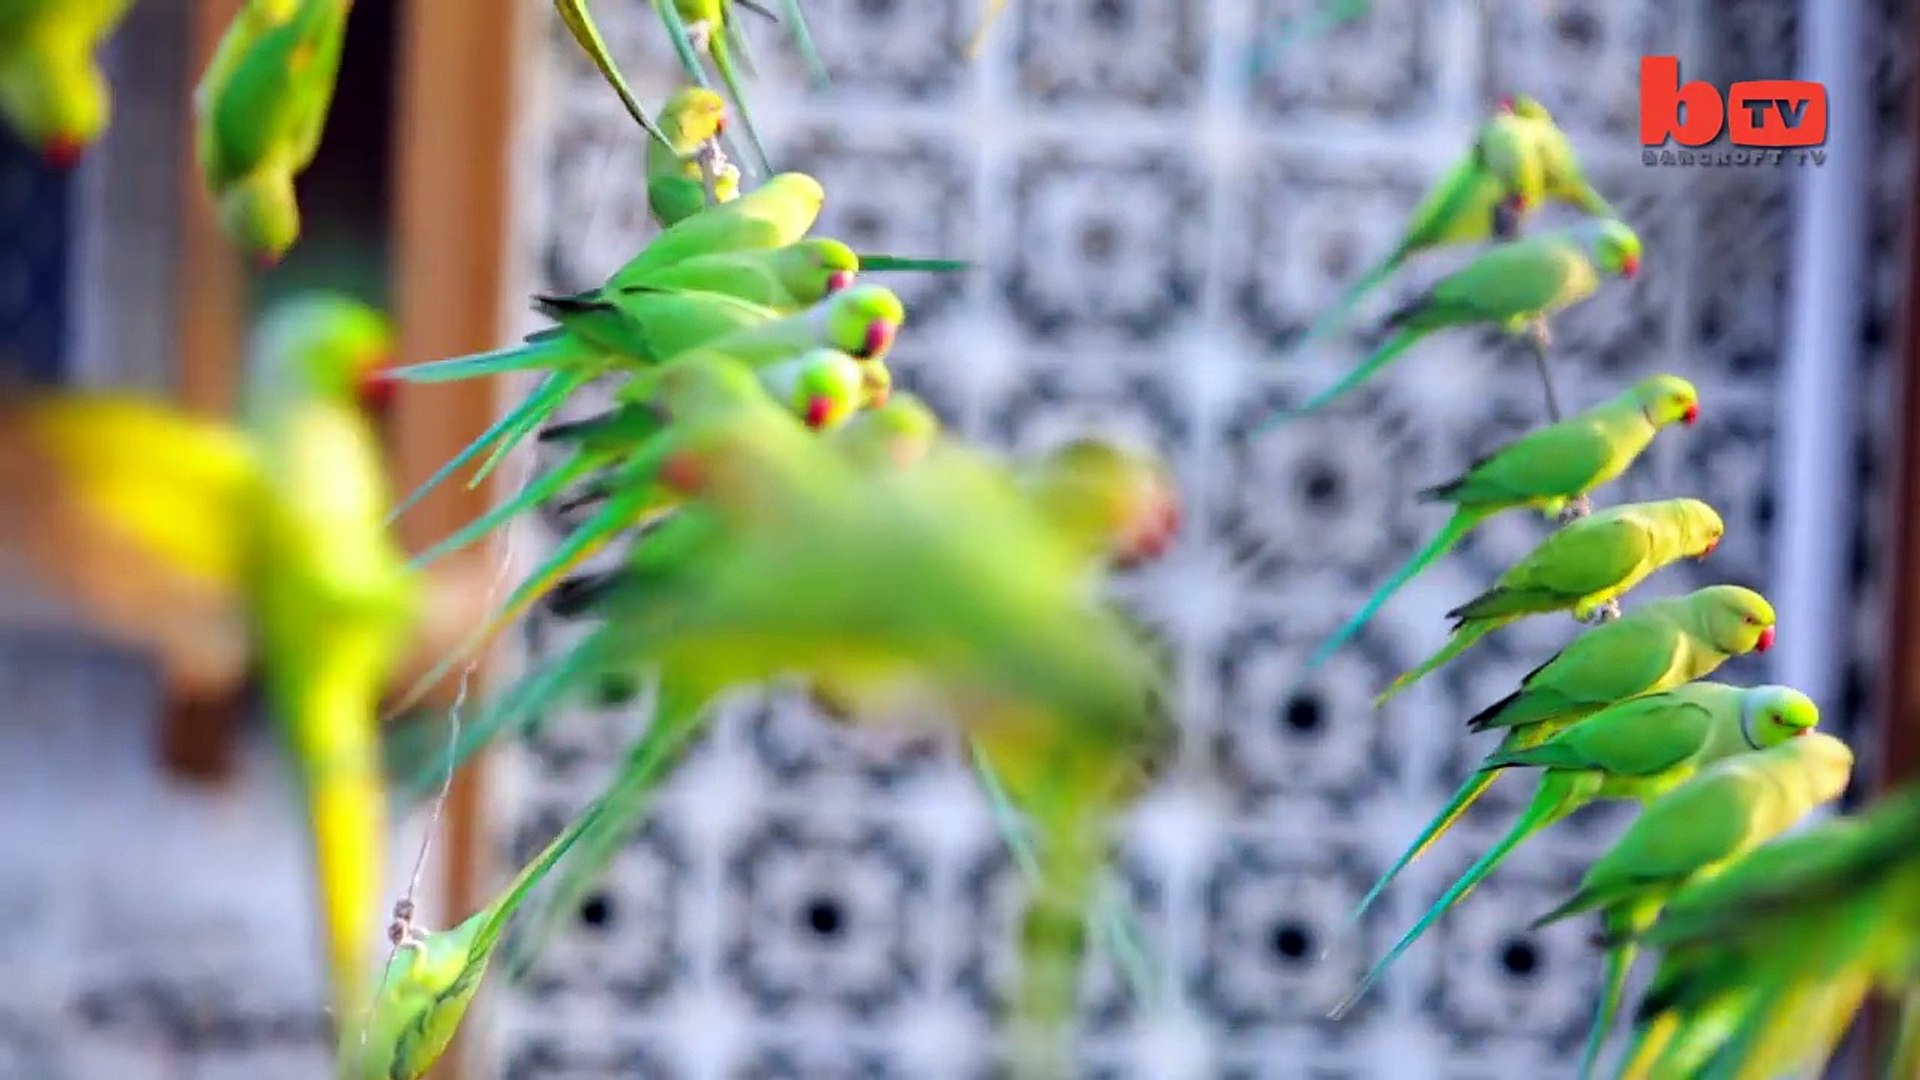 India’s ‘Birdman’ Feeds 4,000 Parakeets A Day